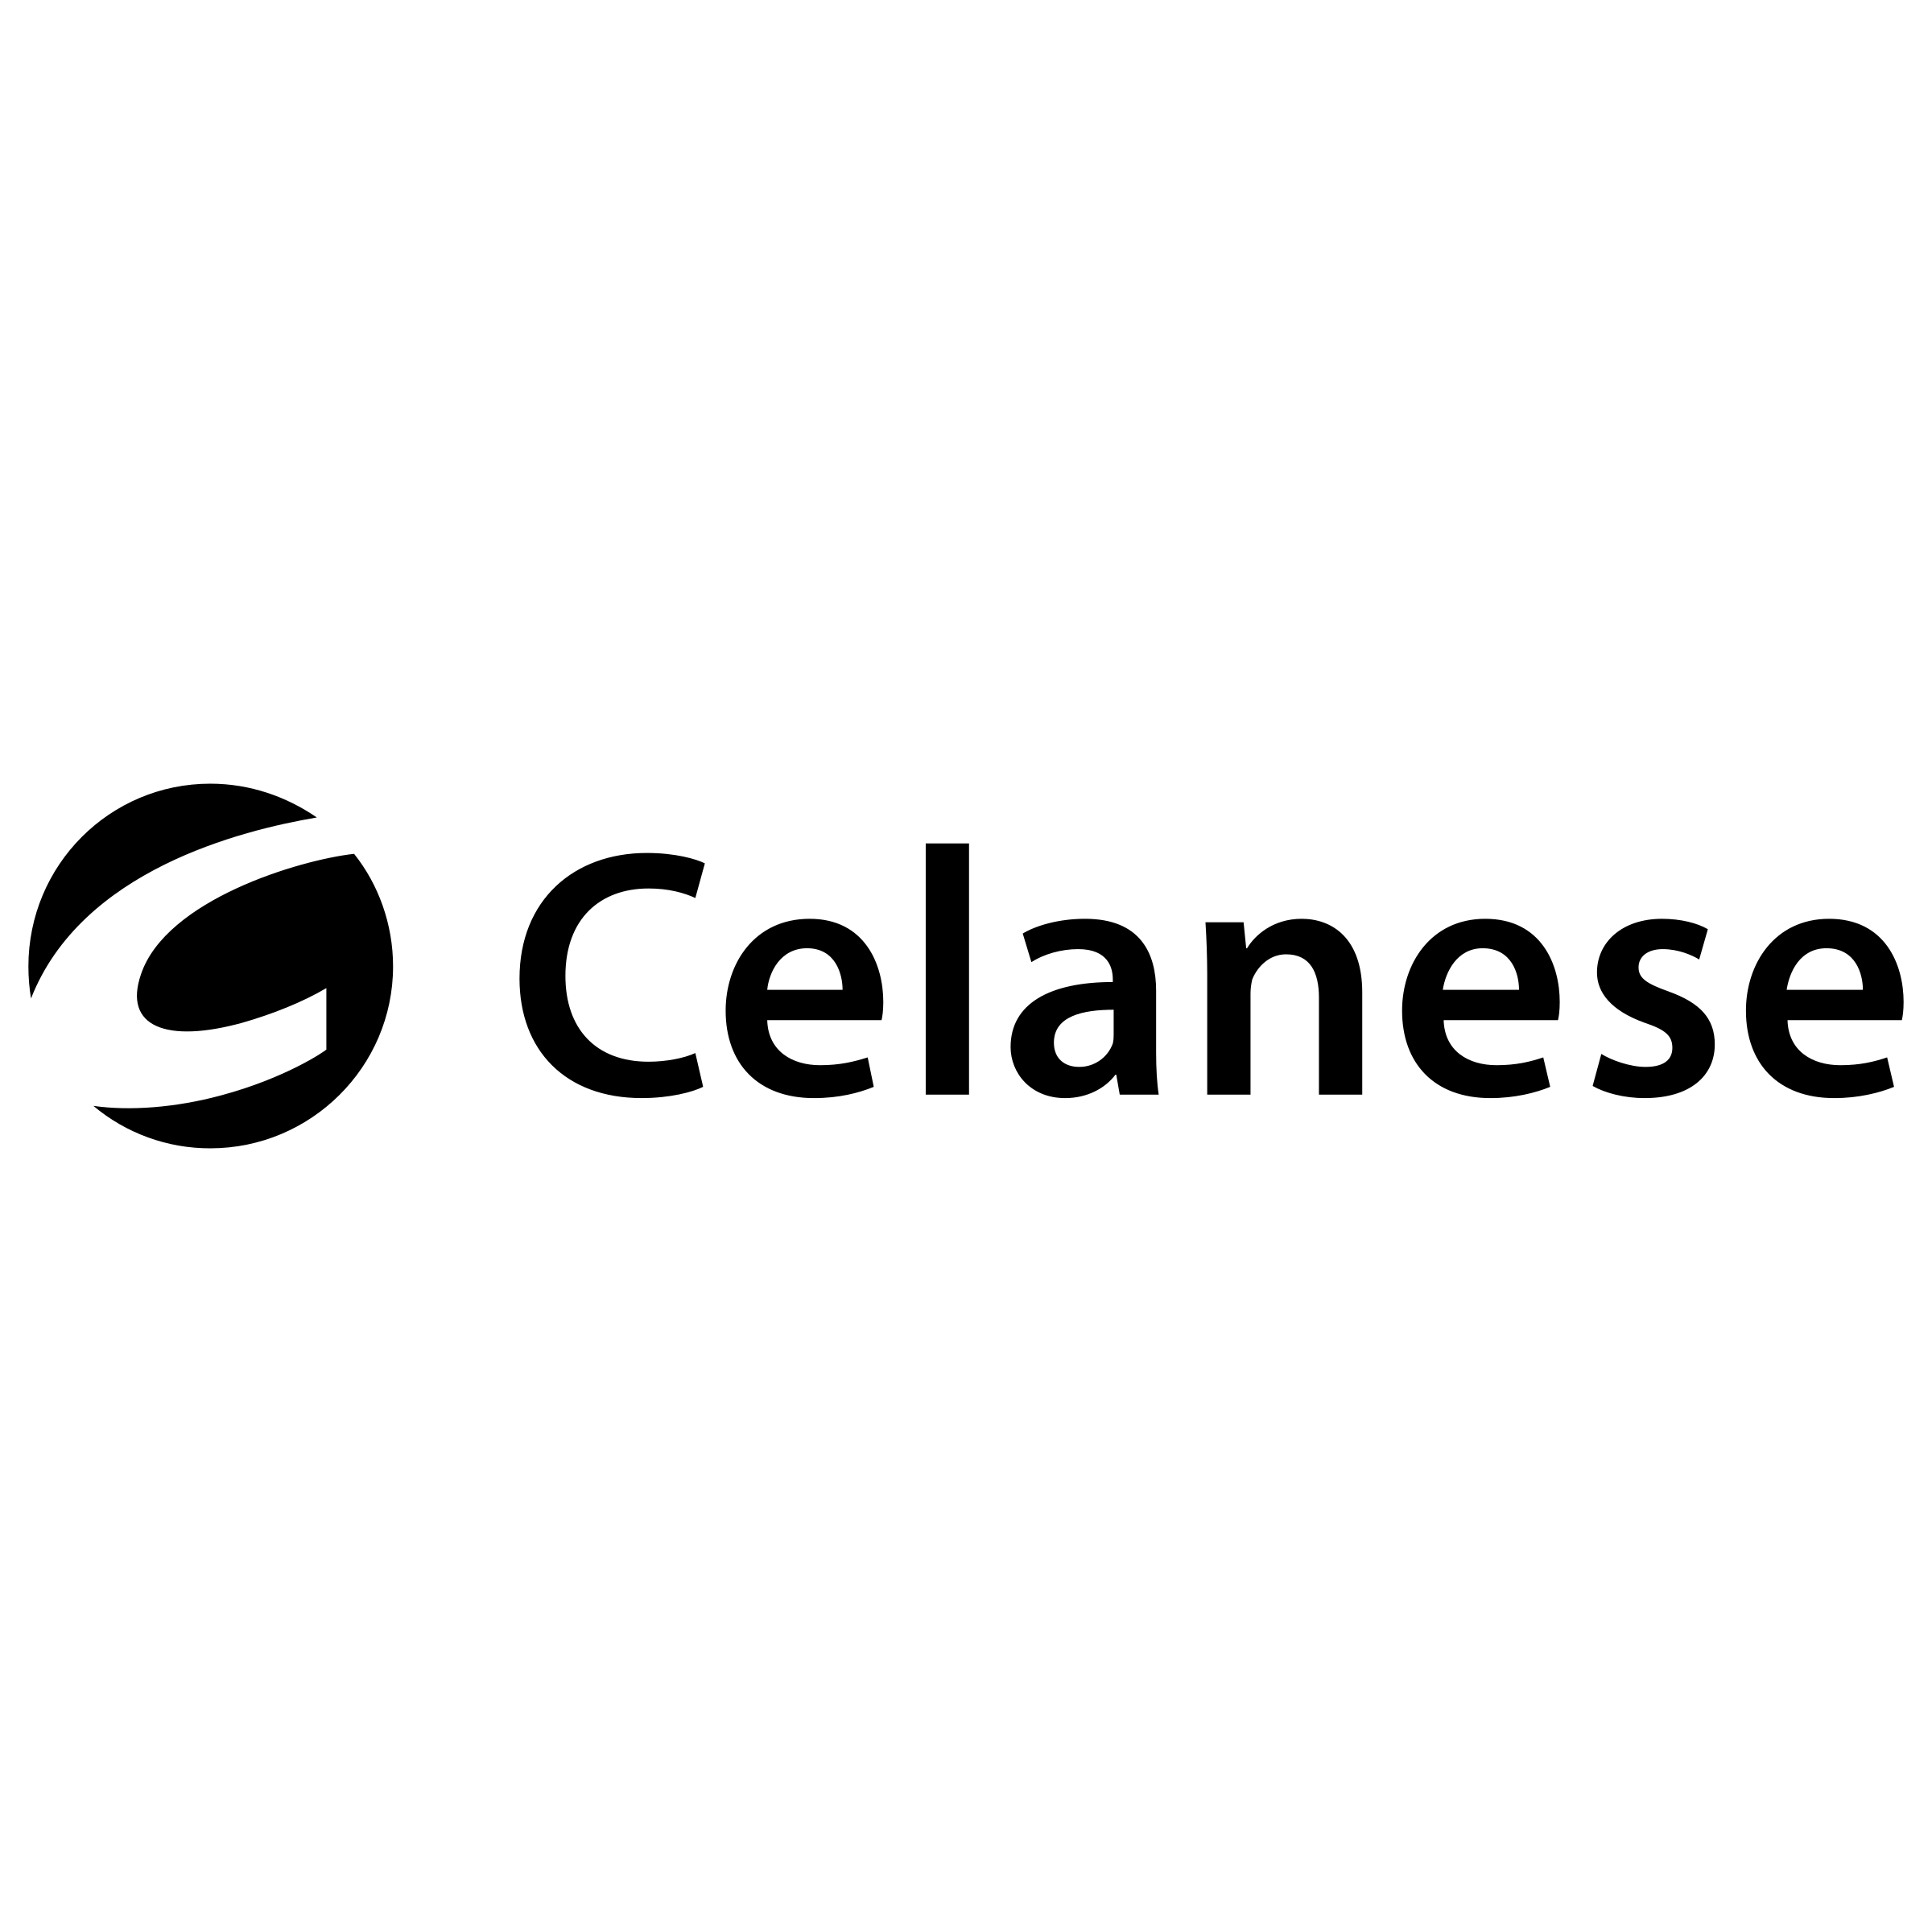 Celanese Logo - Celanese Logo PNG Transparent & SVG Vector - Freebie Supply